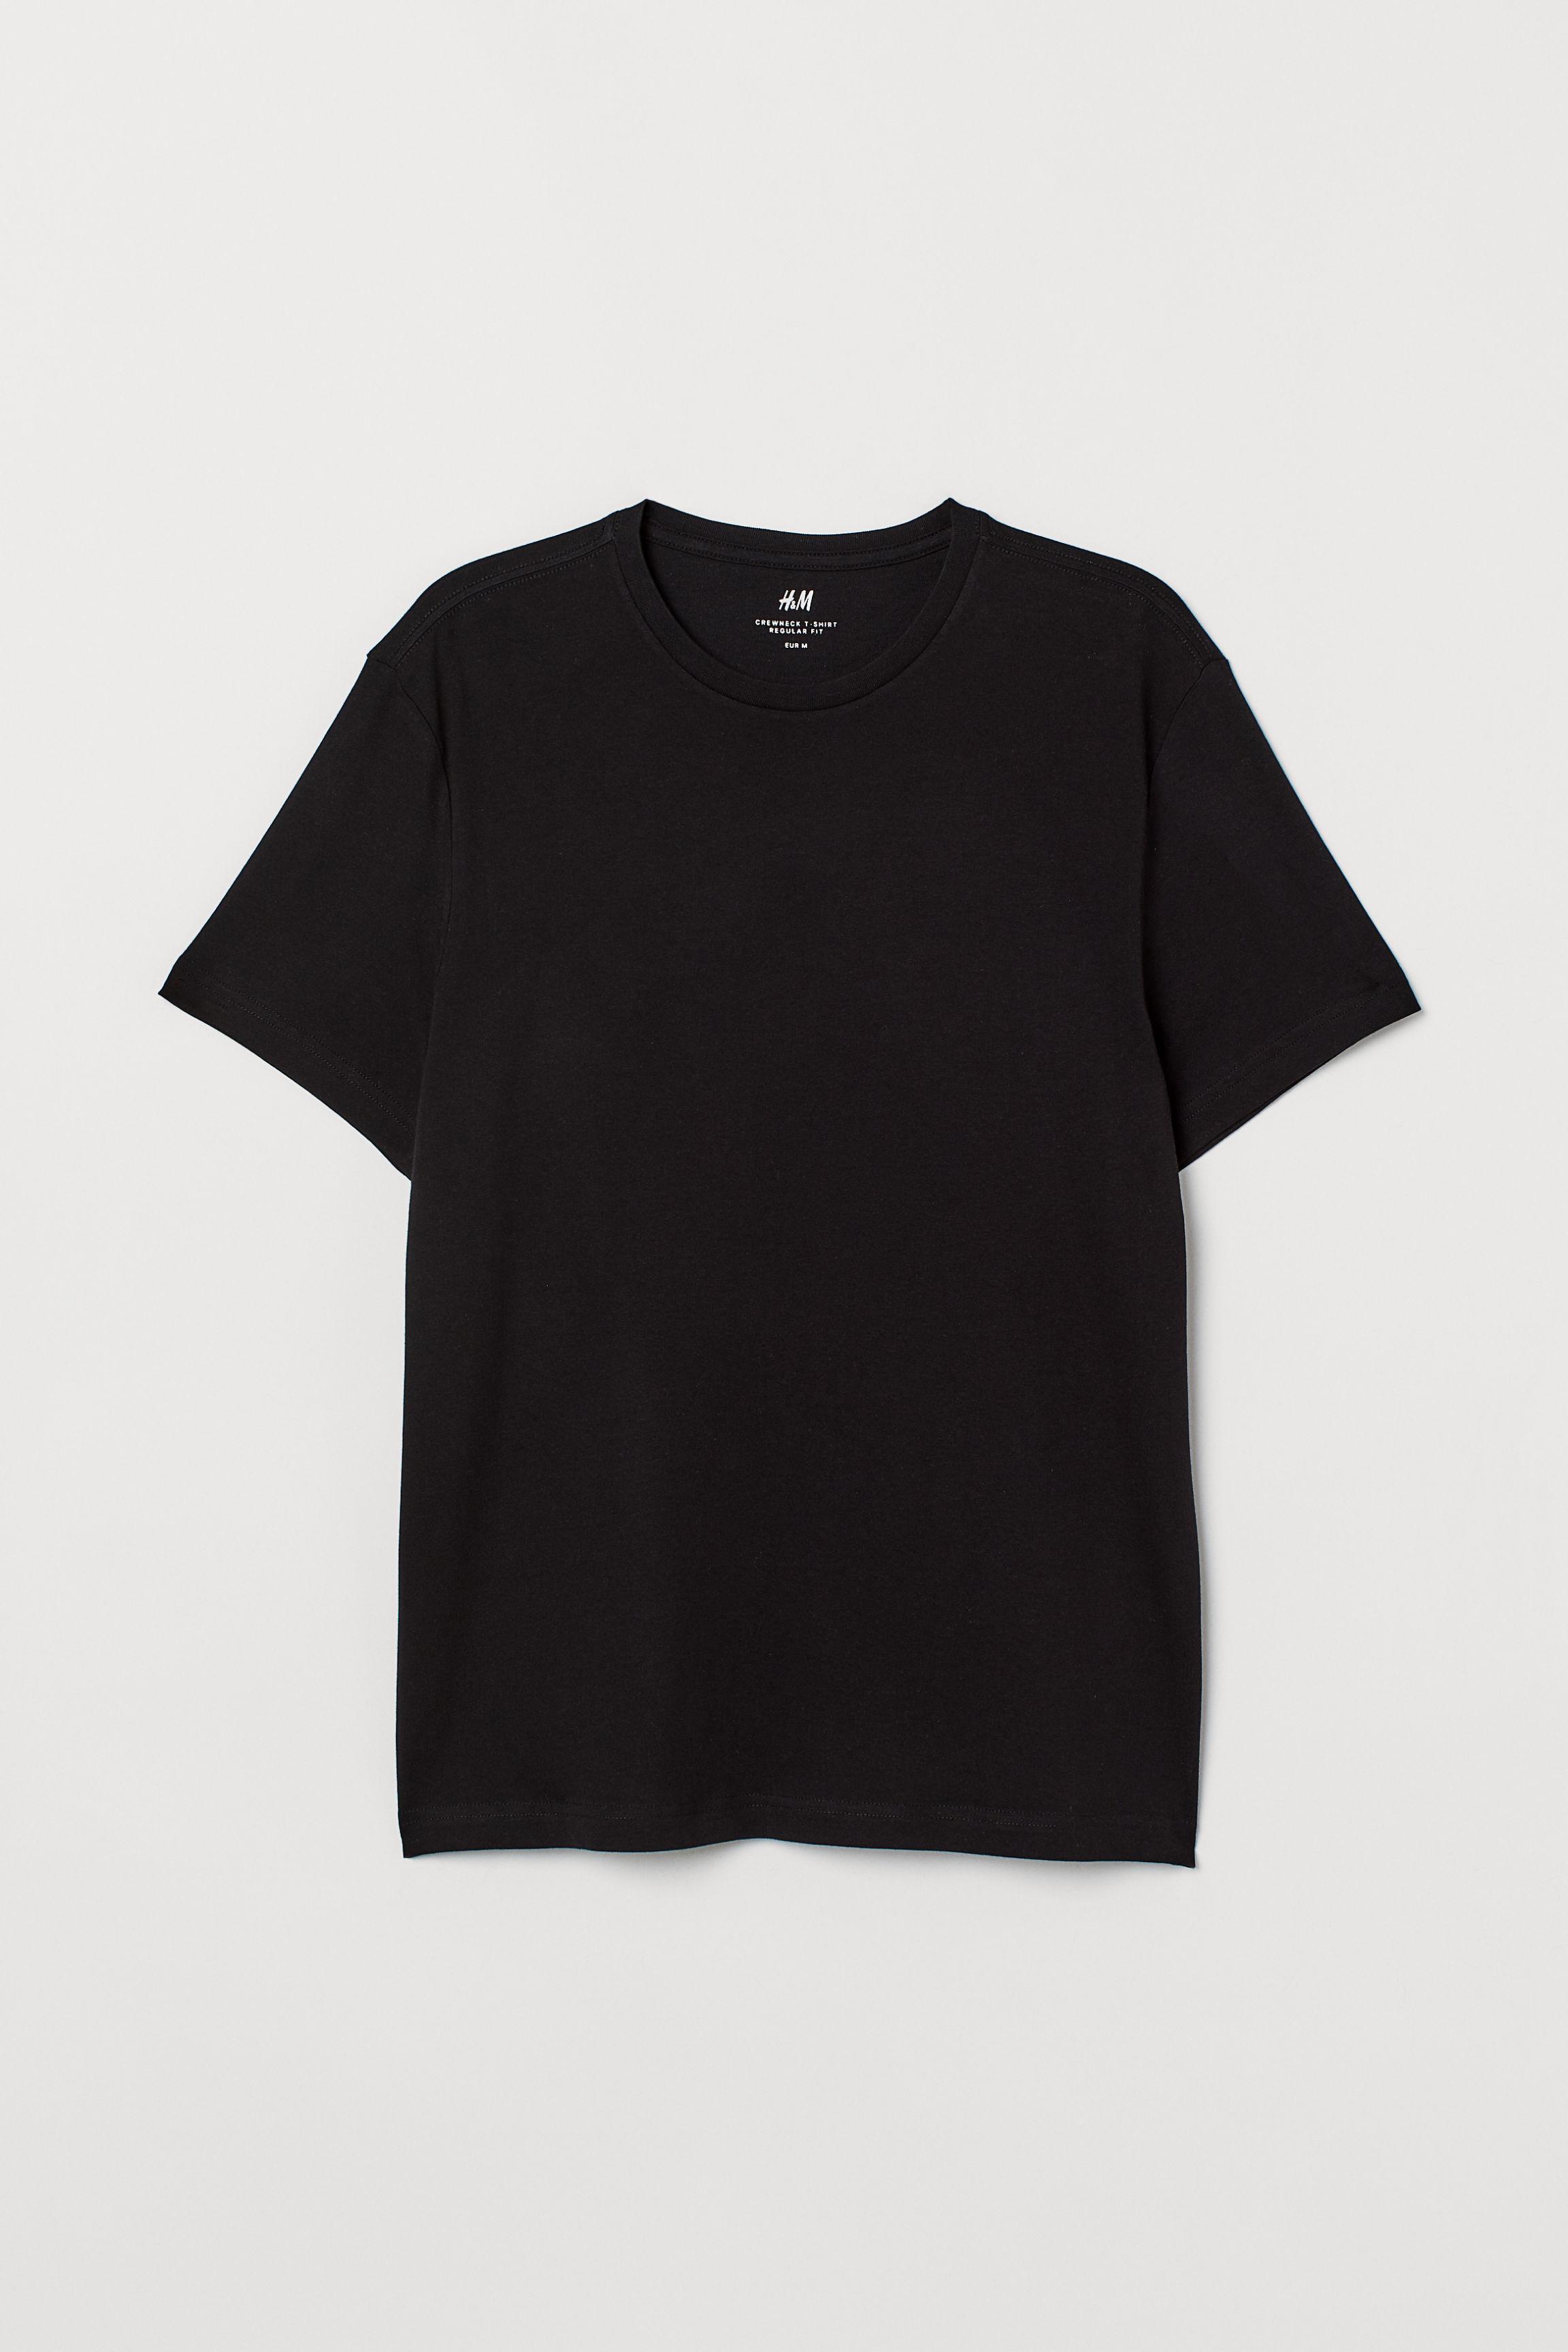 H&M 5-pack T-shirts Regular Fit in Black for Men - Lyst